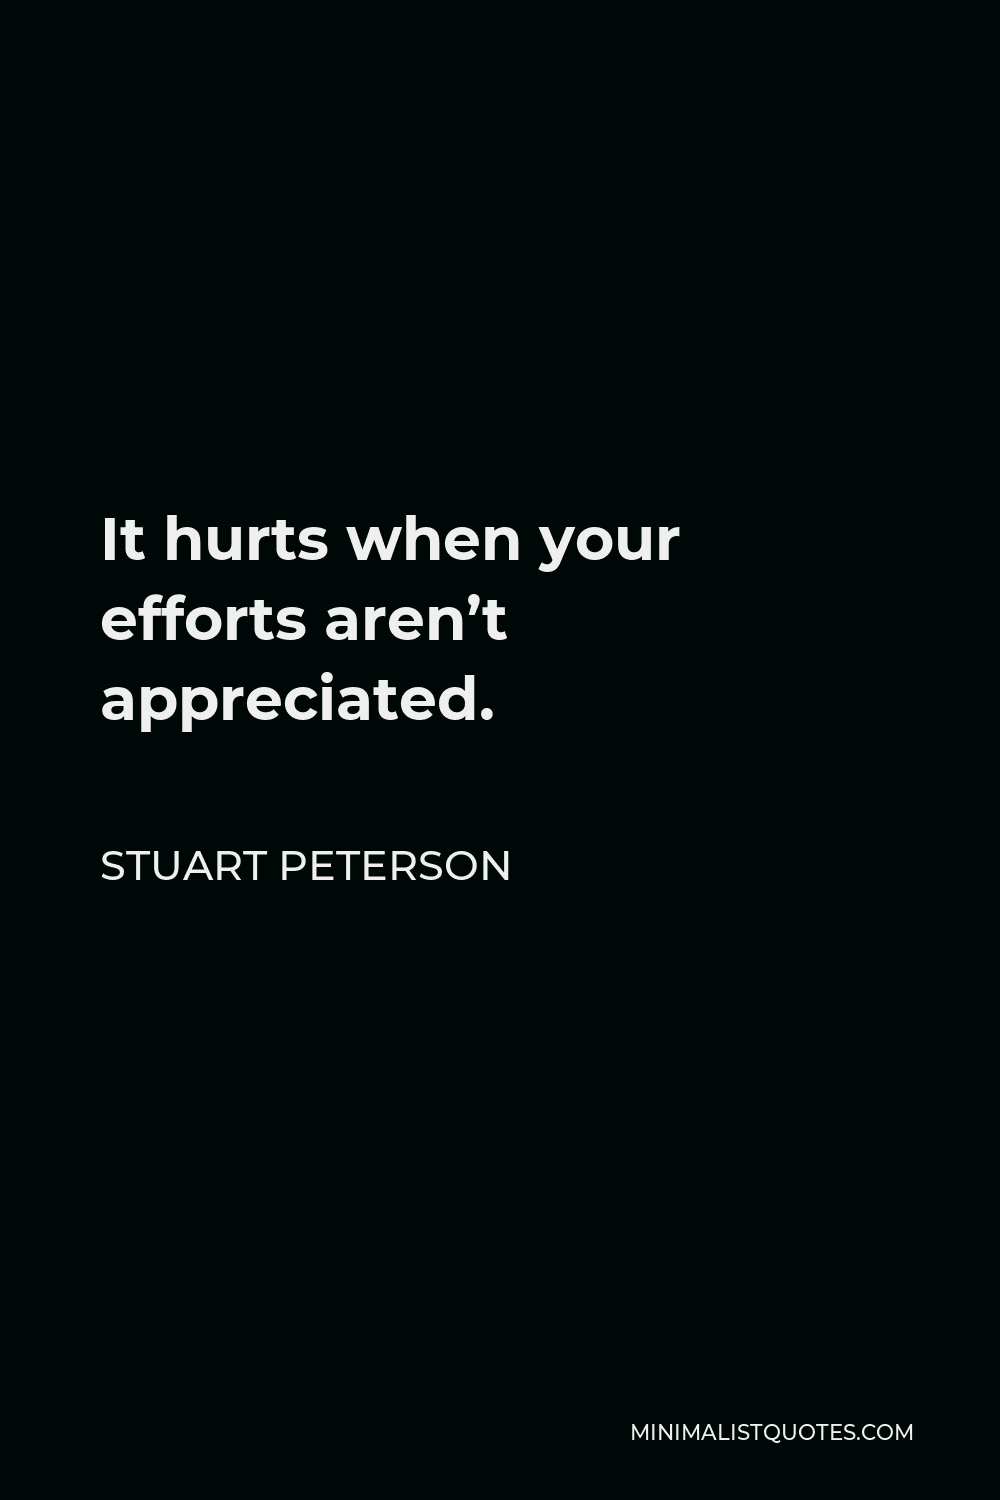 Stuart Peterson Quote - It hurts when your efforts aren’t appreciated.